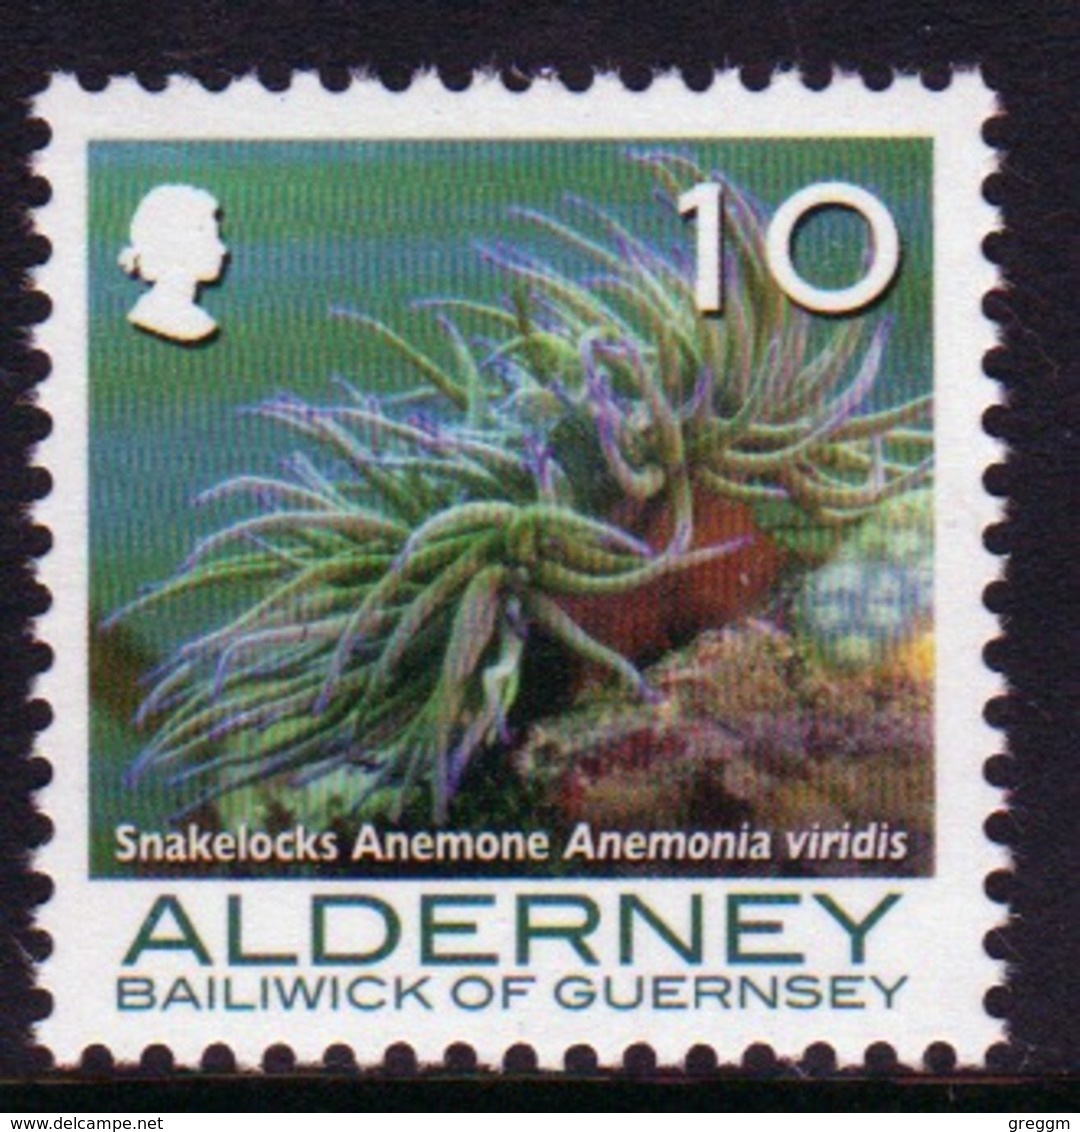 Alderney Single 10p Stamp From The 'Corals And Anemones' Definitive Set. - Alderney